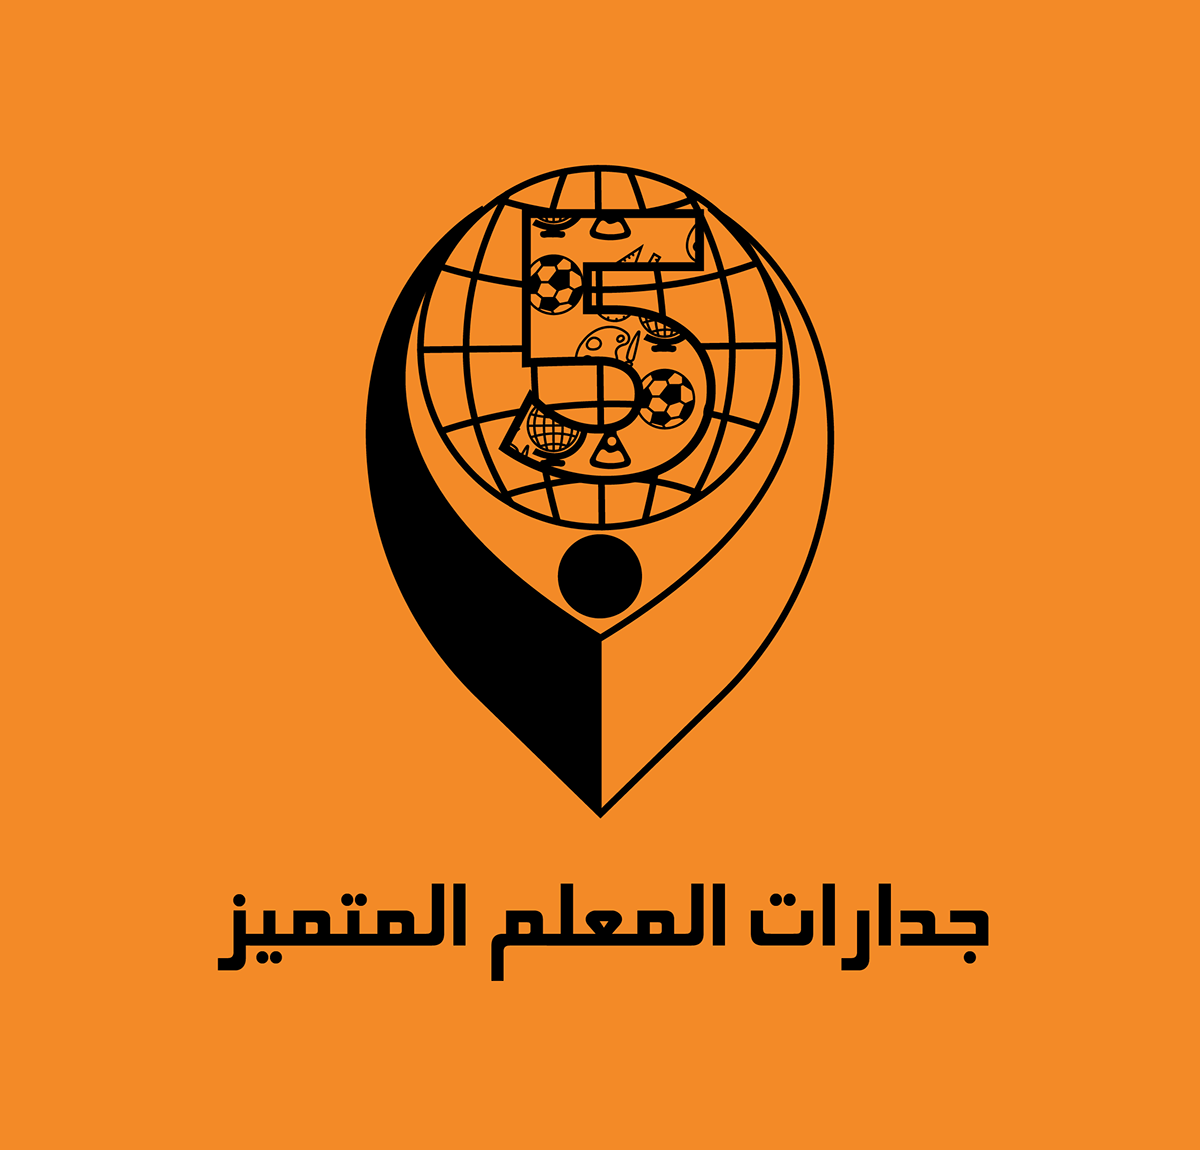 logo design simple arabic amazing Beautiful school treacher graphic creative